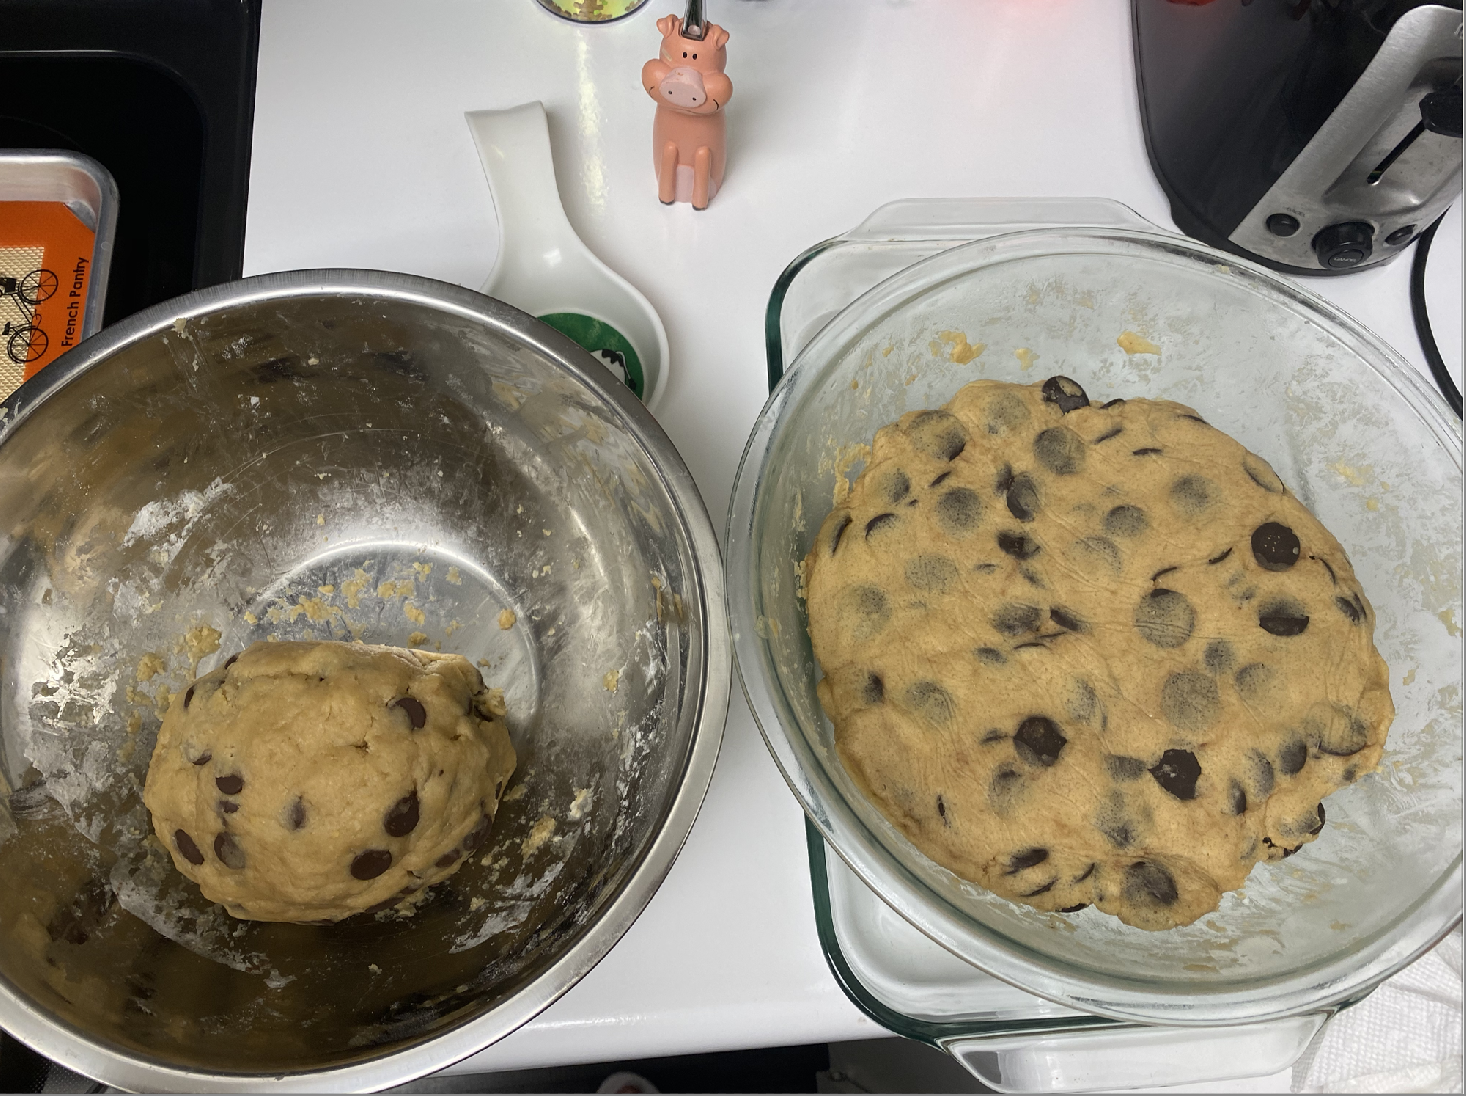 Both doughs ready to bake